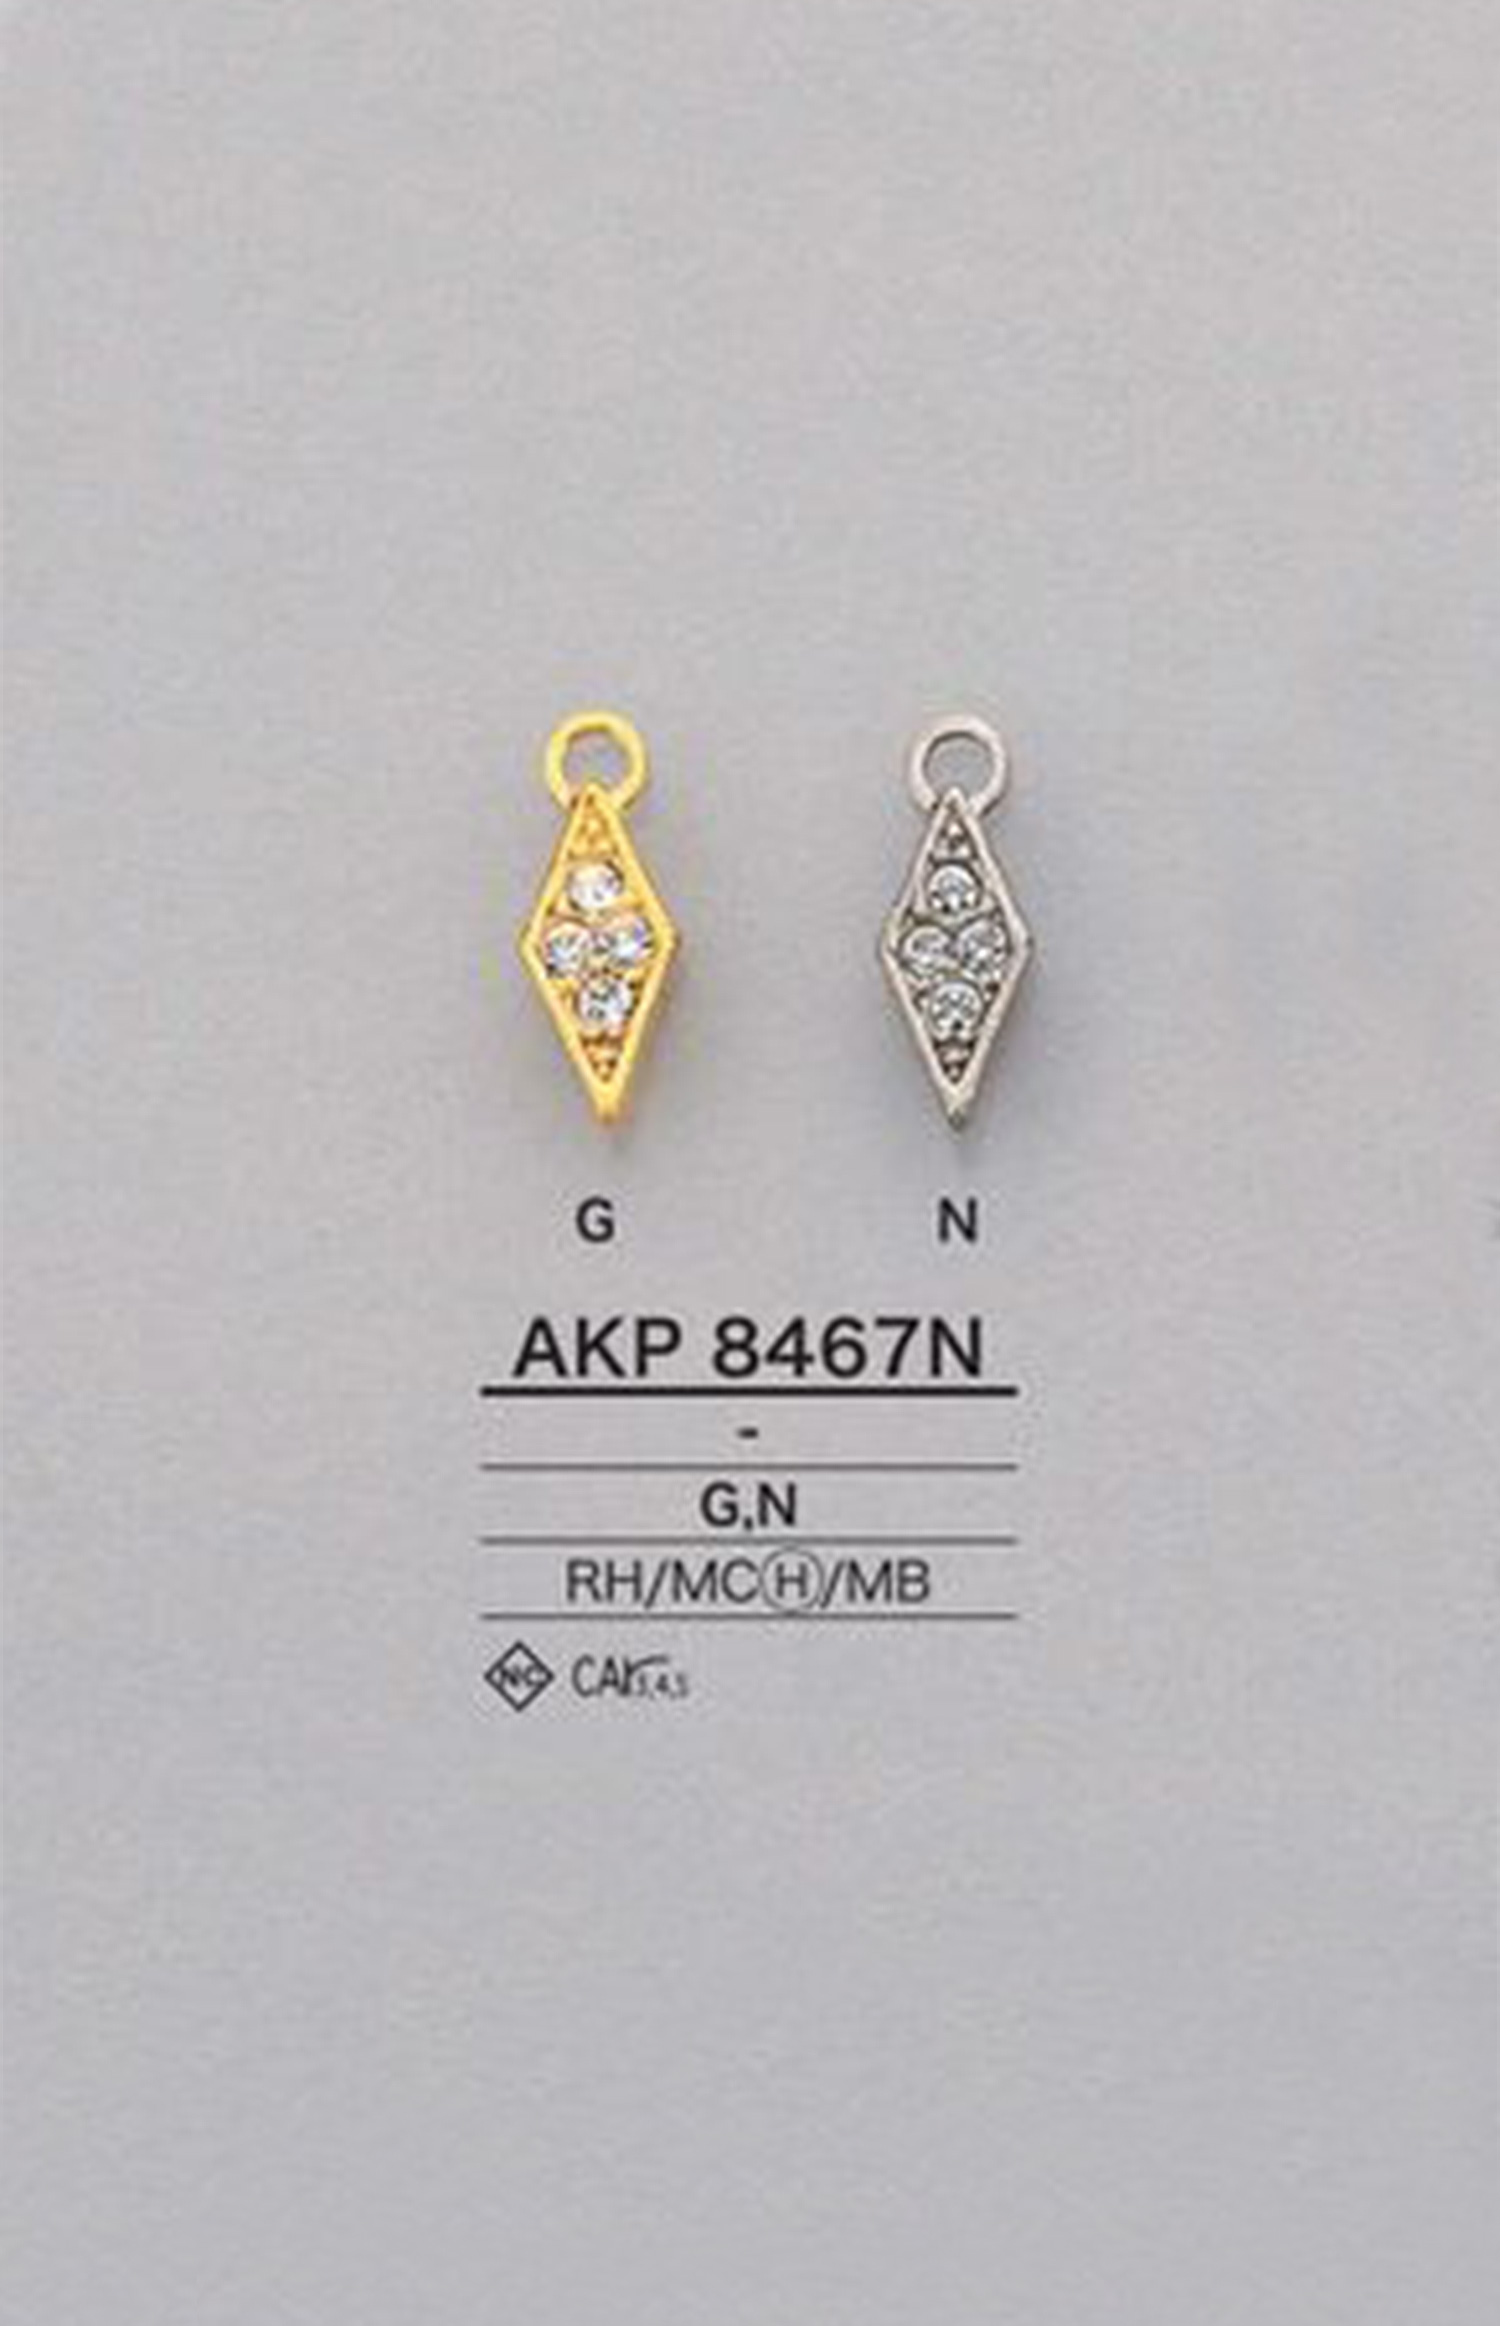 AKP8467N 모조 다이아몬드 다이아몬드 지퍼 포인트 (지퍼 슬라이더) IRIS